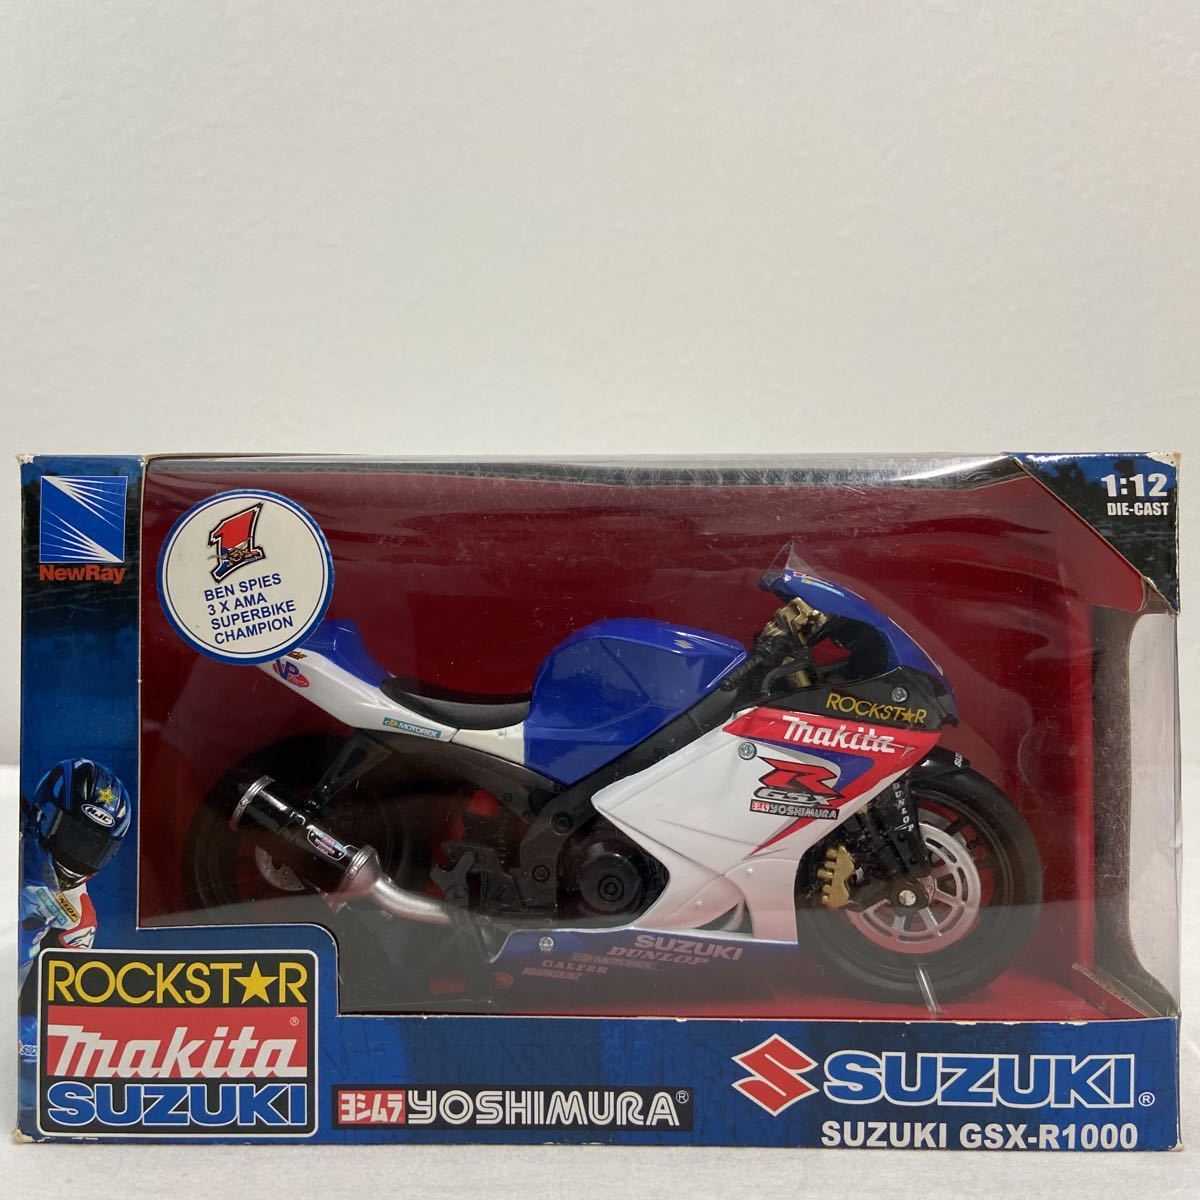 NewRay 1/12 ROCKSTAR Makita SUZUKI GSX-R1000 #1 Ben SPIES YOSHIMURA スズキ ロックスター マキタ ヨシムラ バイク 完成品 ミニカー